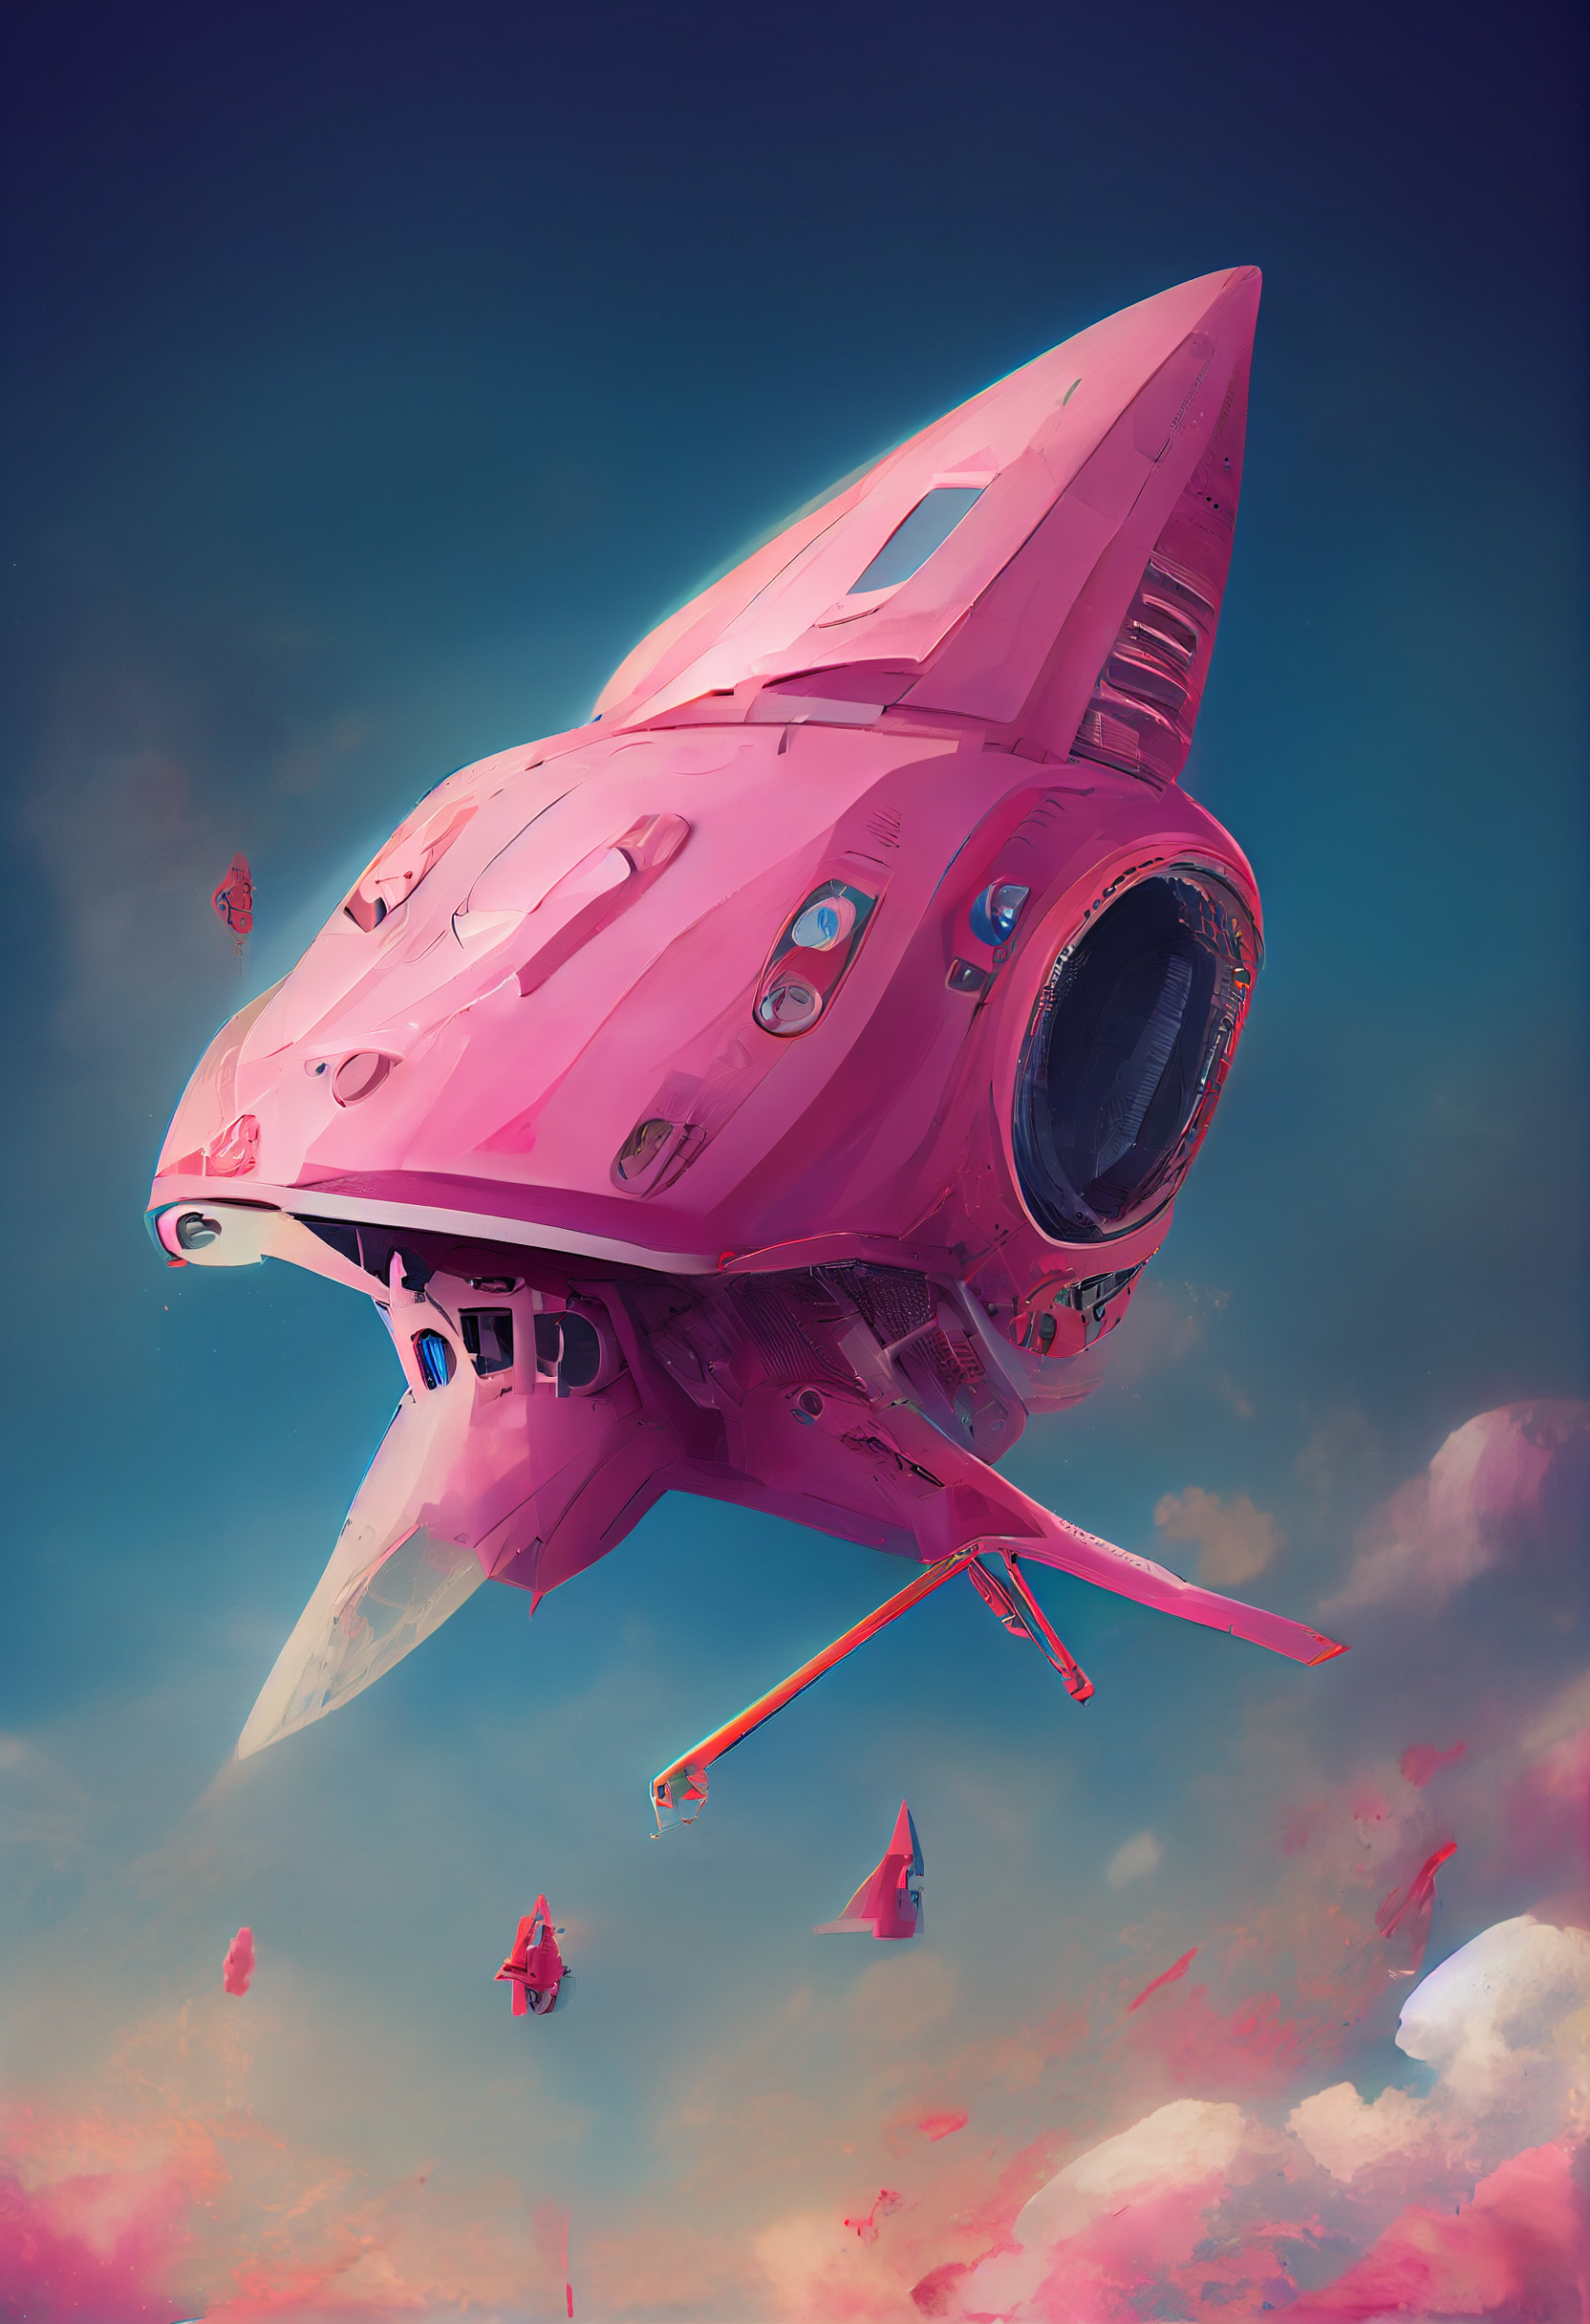 surreal pink spaceship